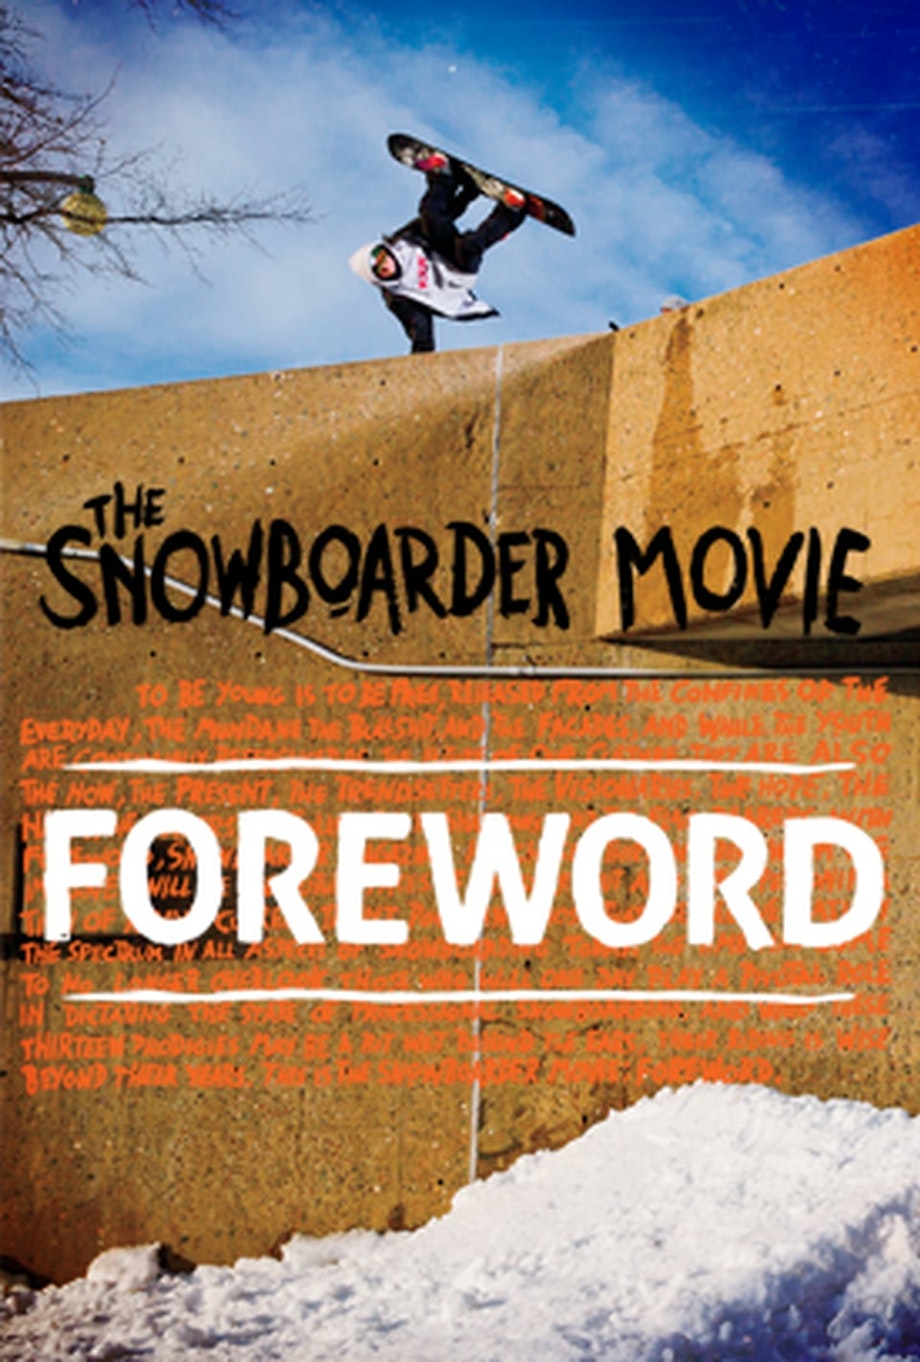 The Snowboarder Movie: Foreword